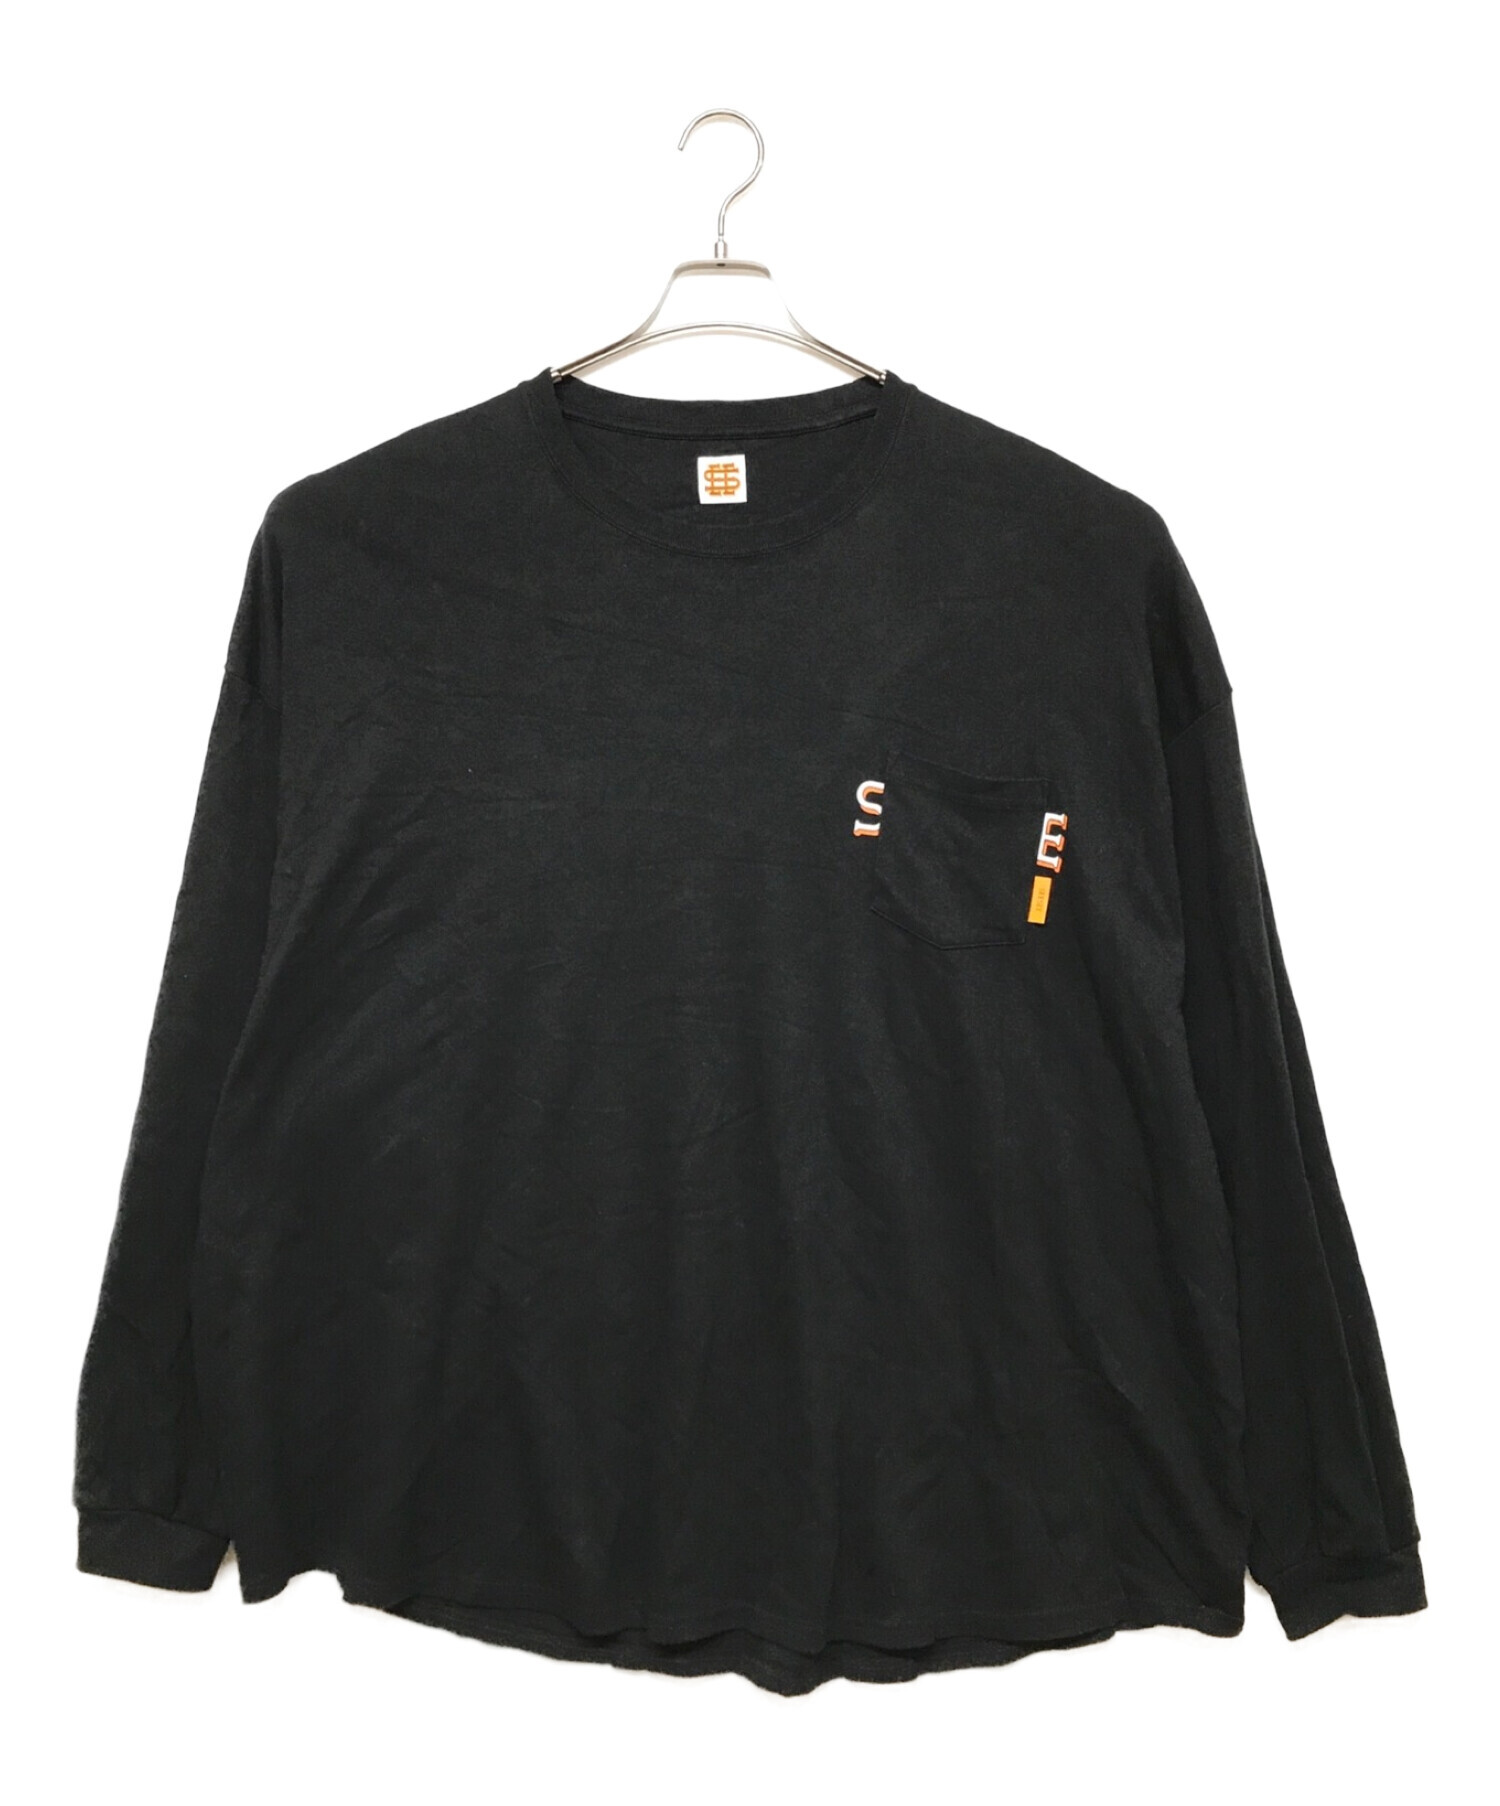 SEESEE SUPER BIG ROUND LONGSLEEVE PK TEE - Tシャツ/カットソー(七分 